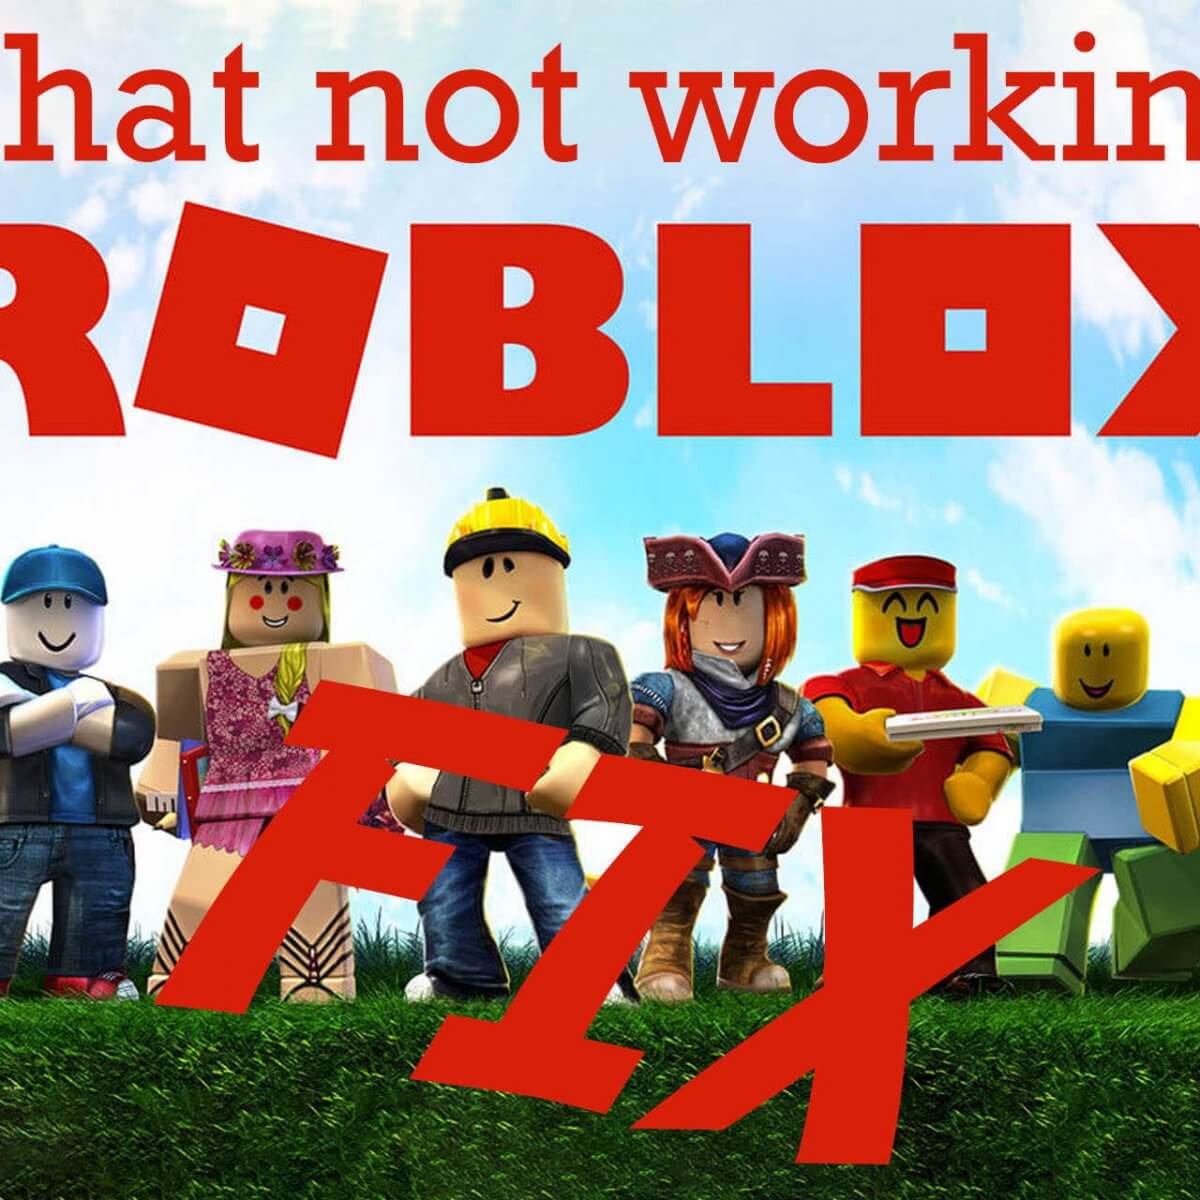 Xbox Roblox Robux Prices